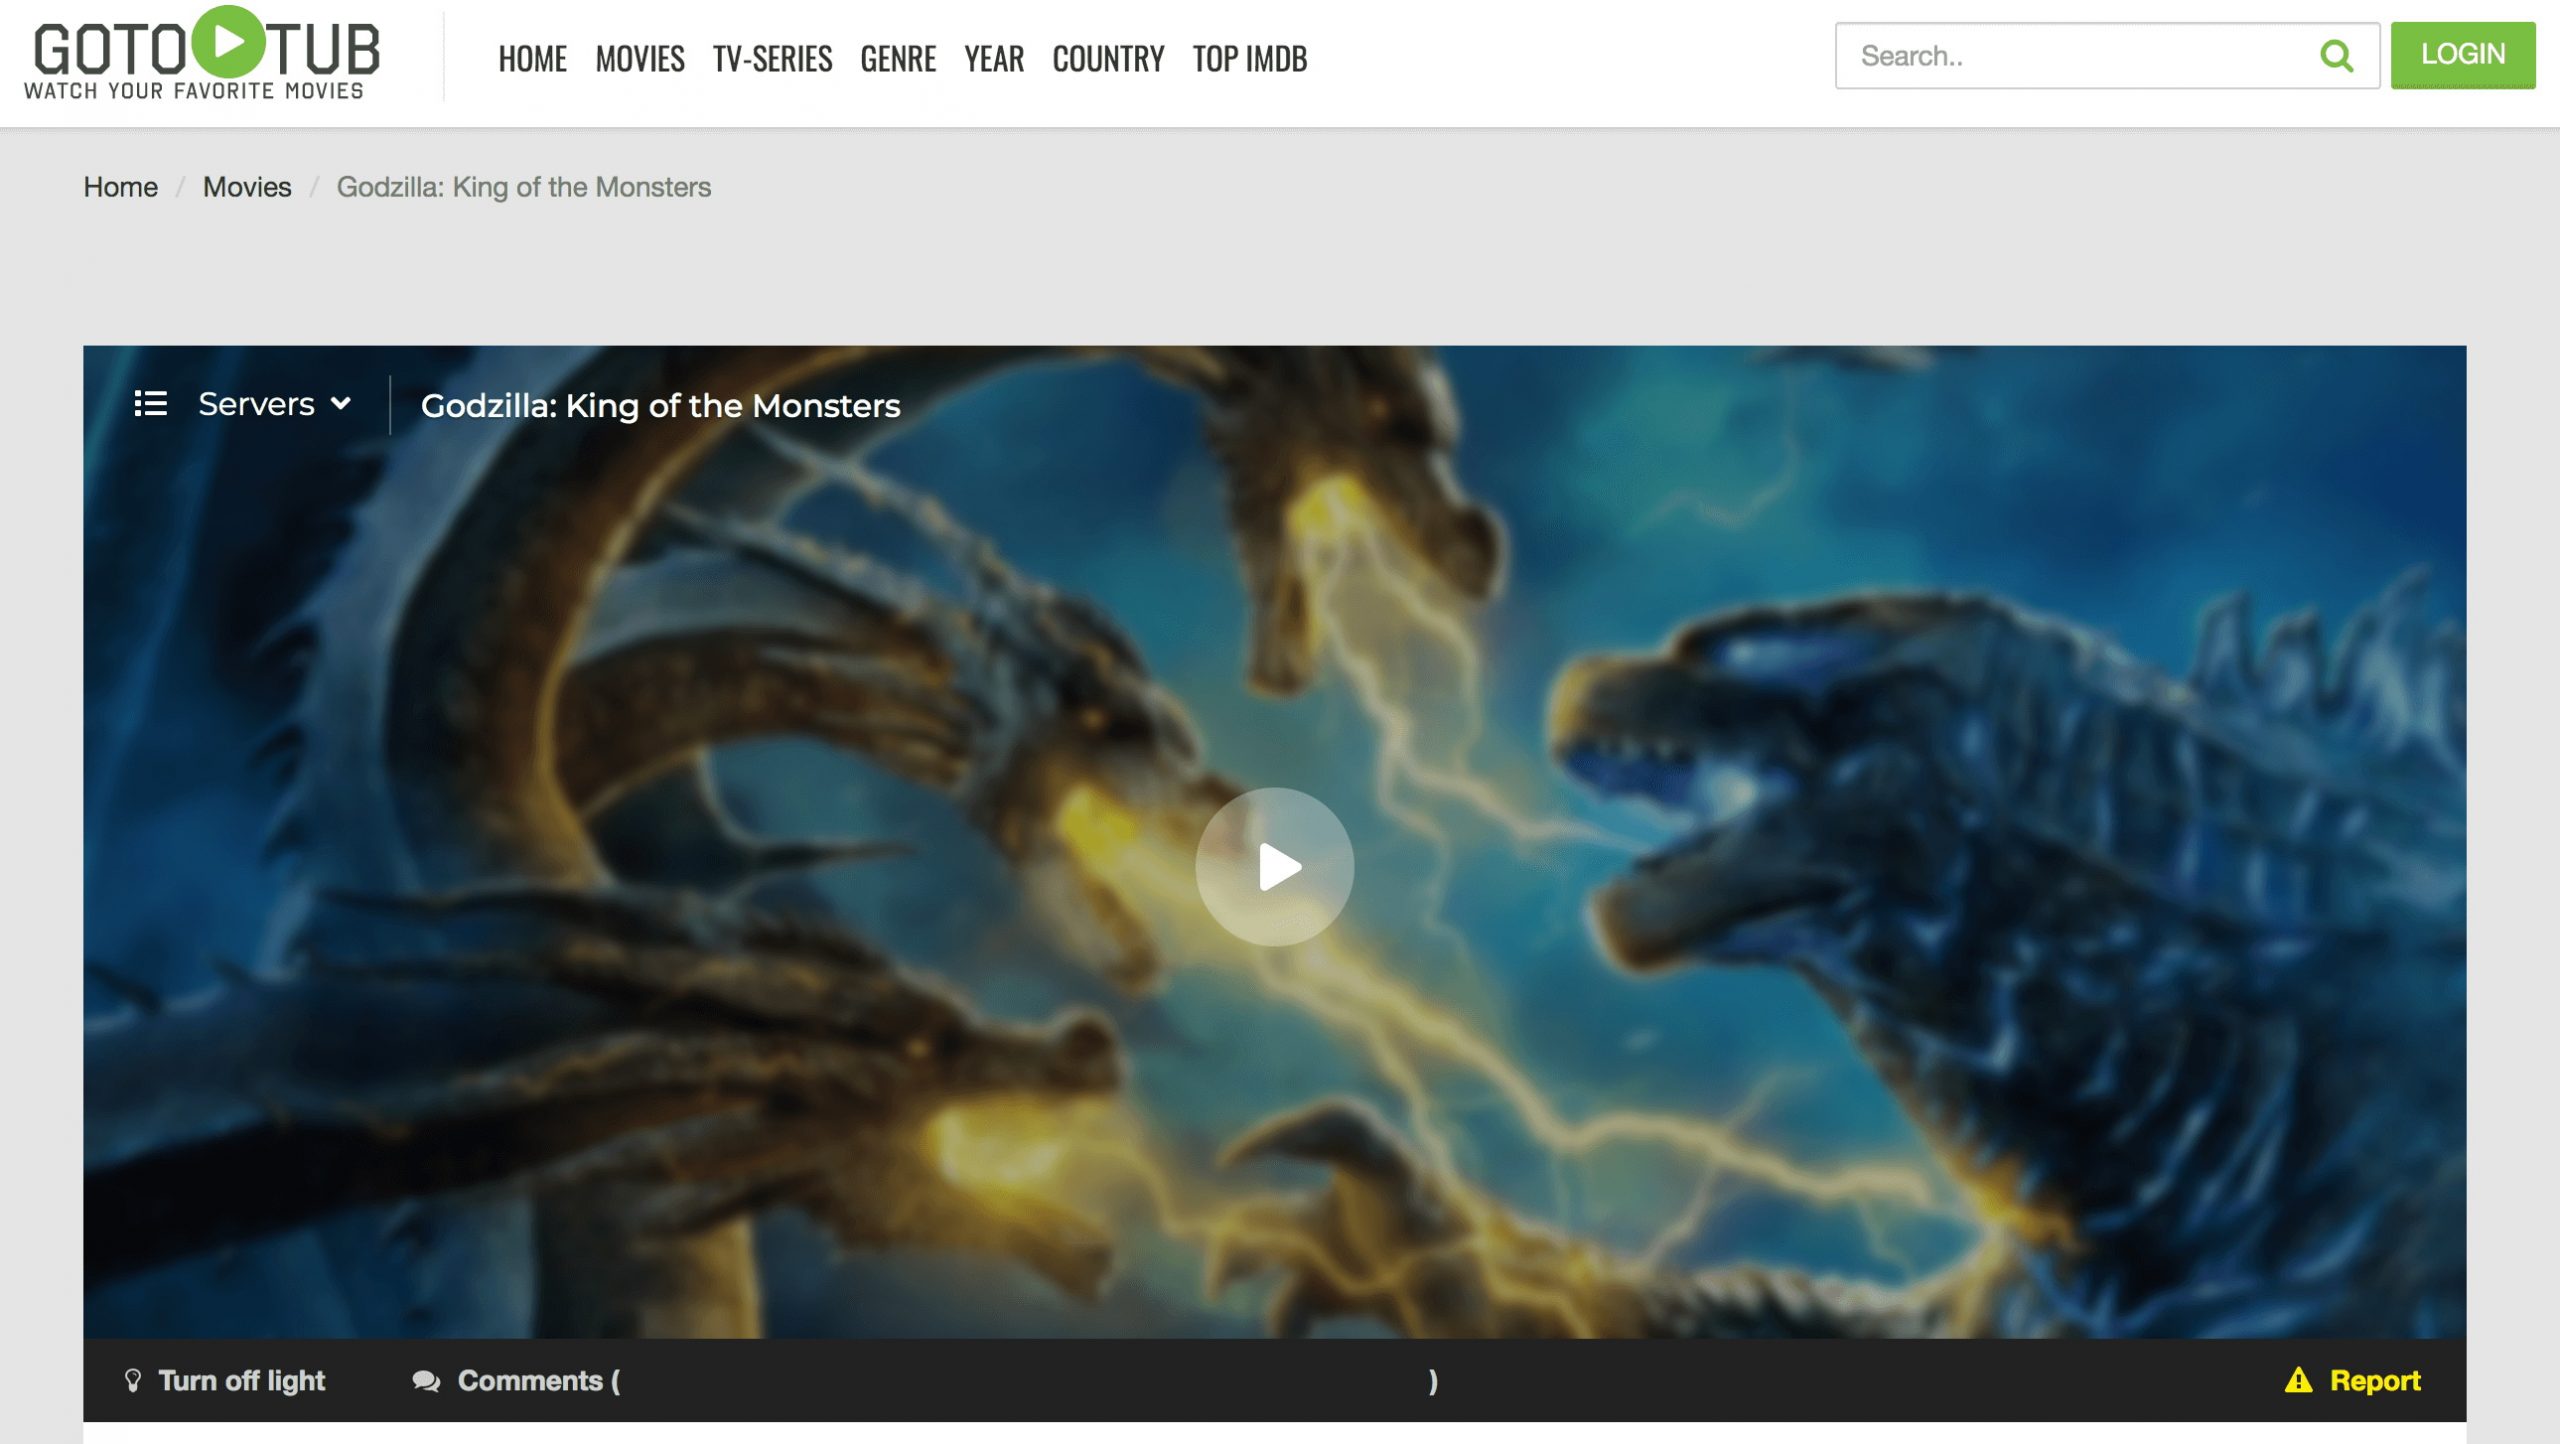  Watch-Godzilla-King-of-the-Monsters-gototub  